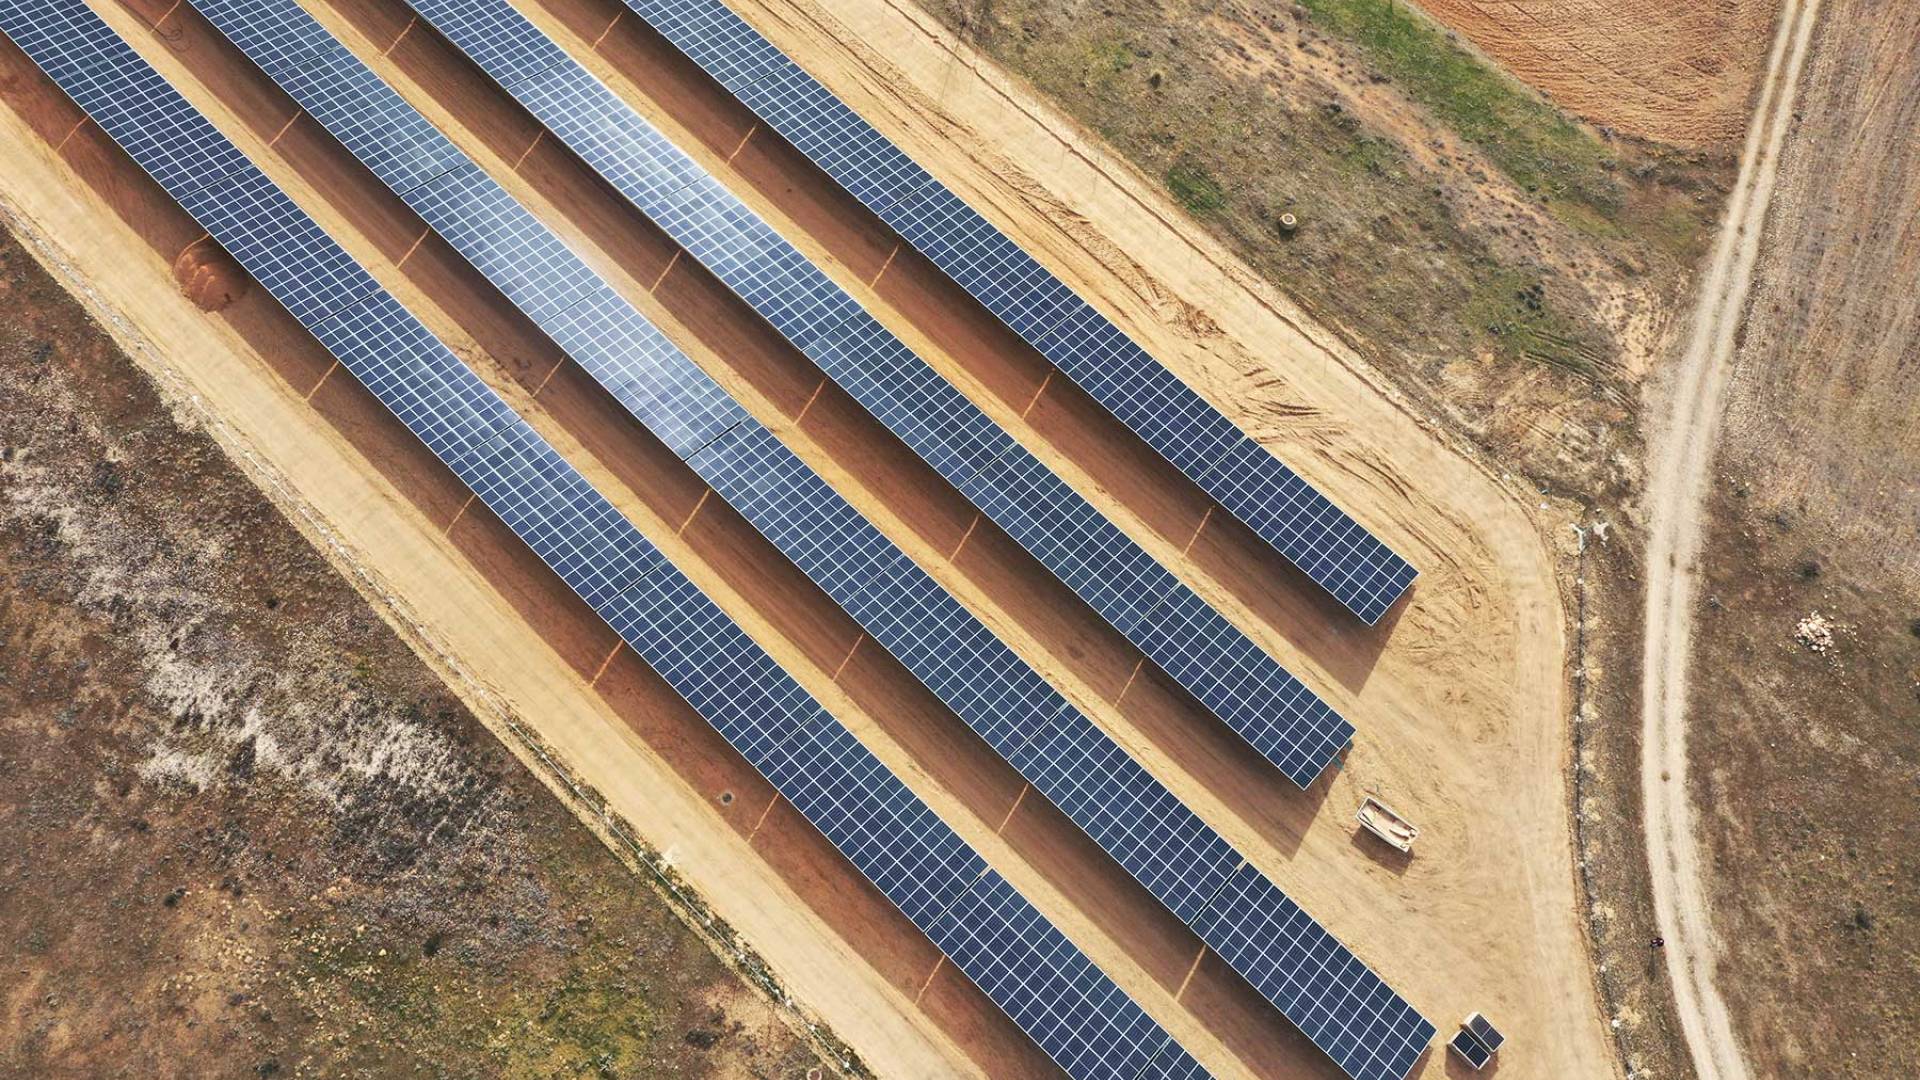 Solar panels at a field near Huf Espana in El Burgo de Osma.